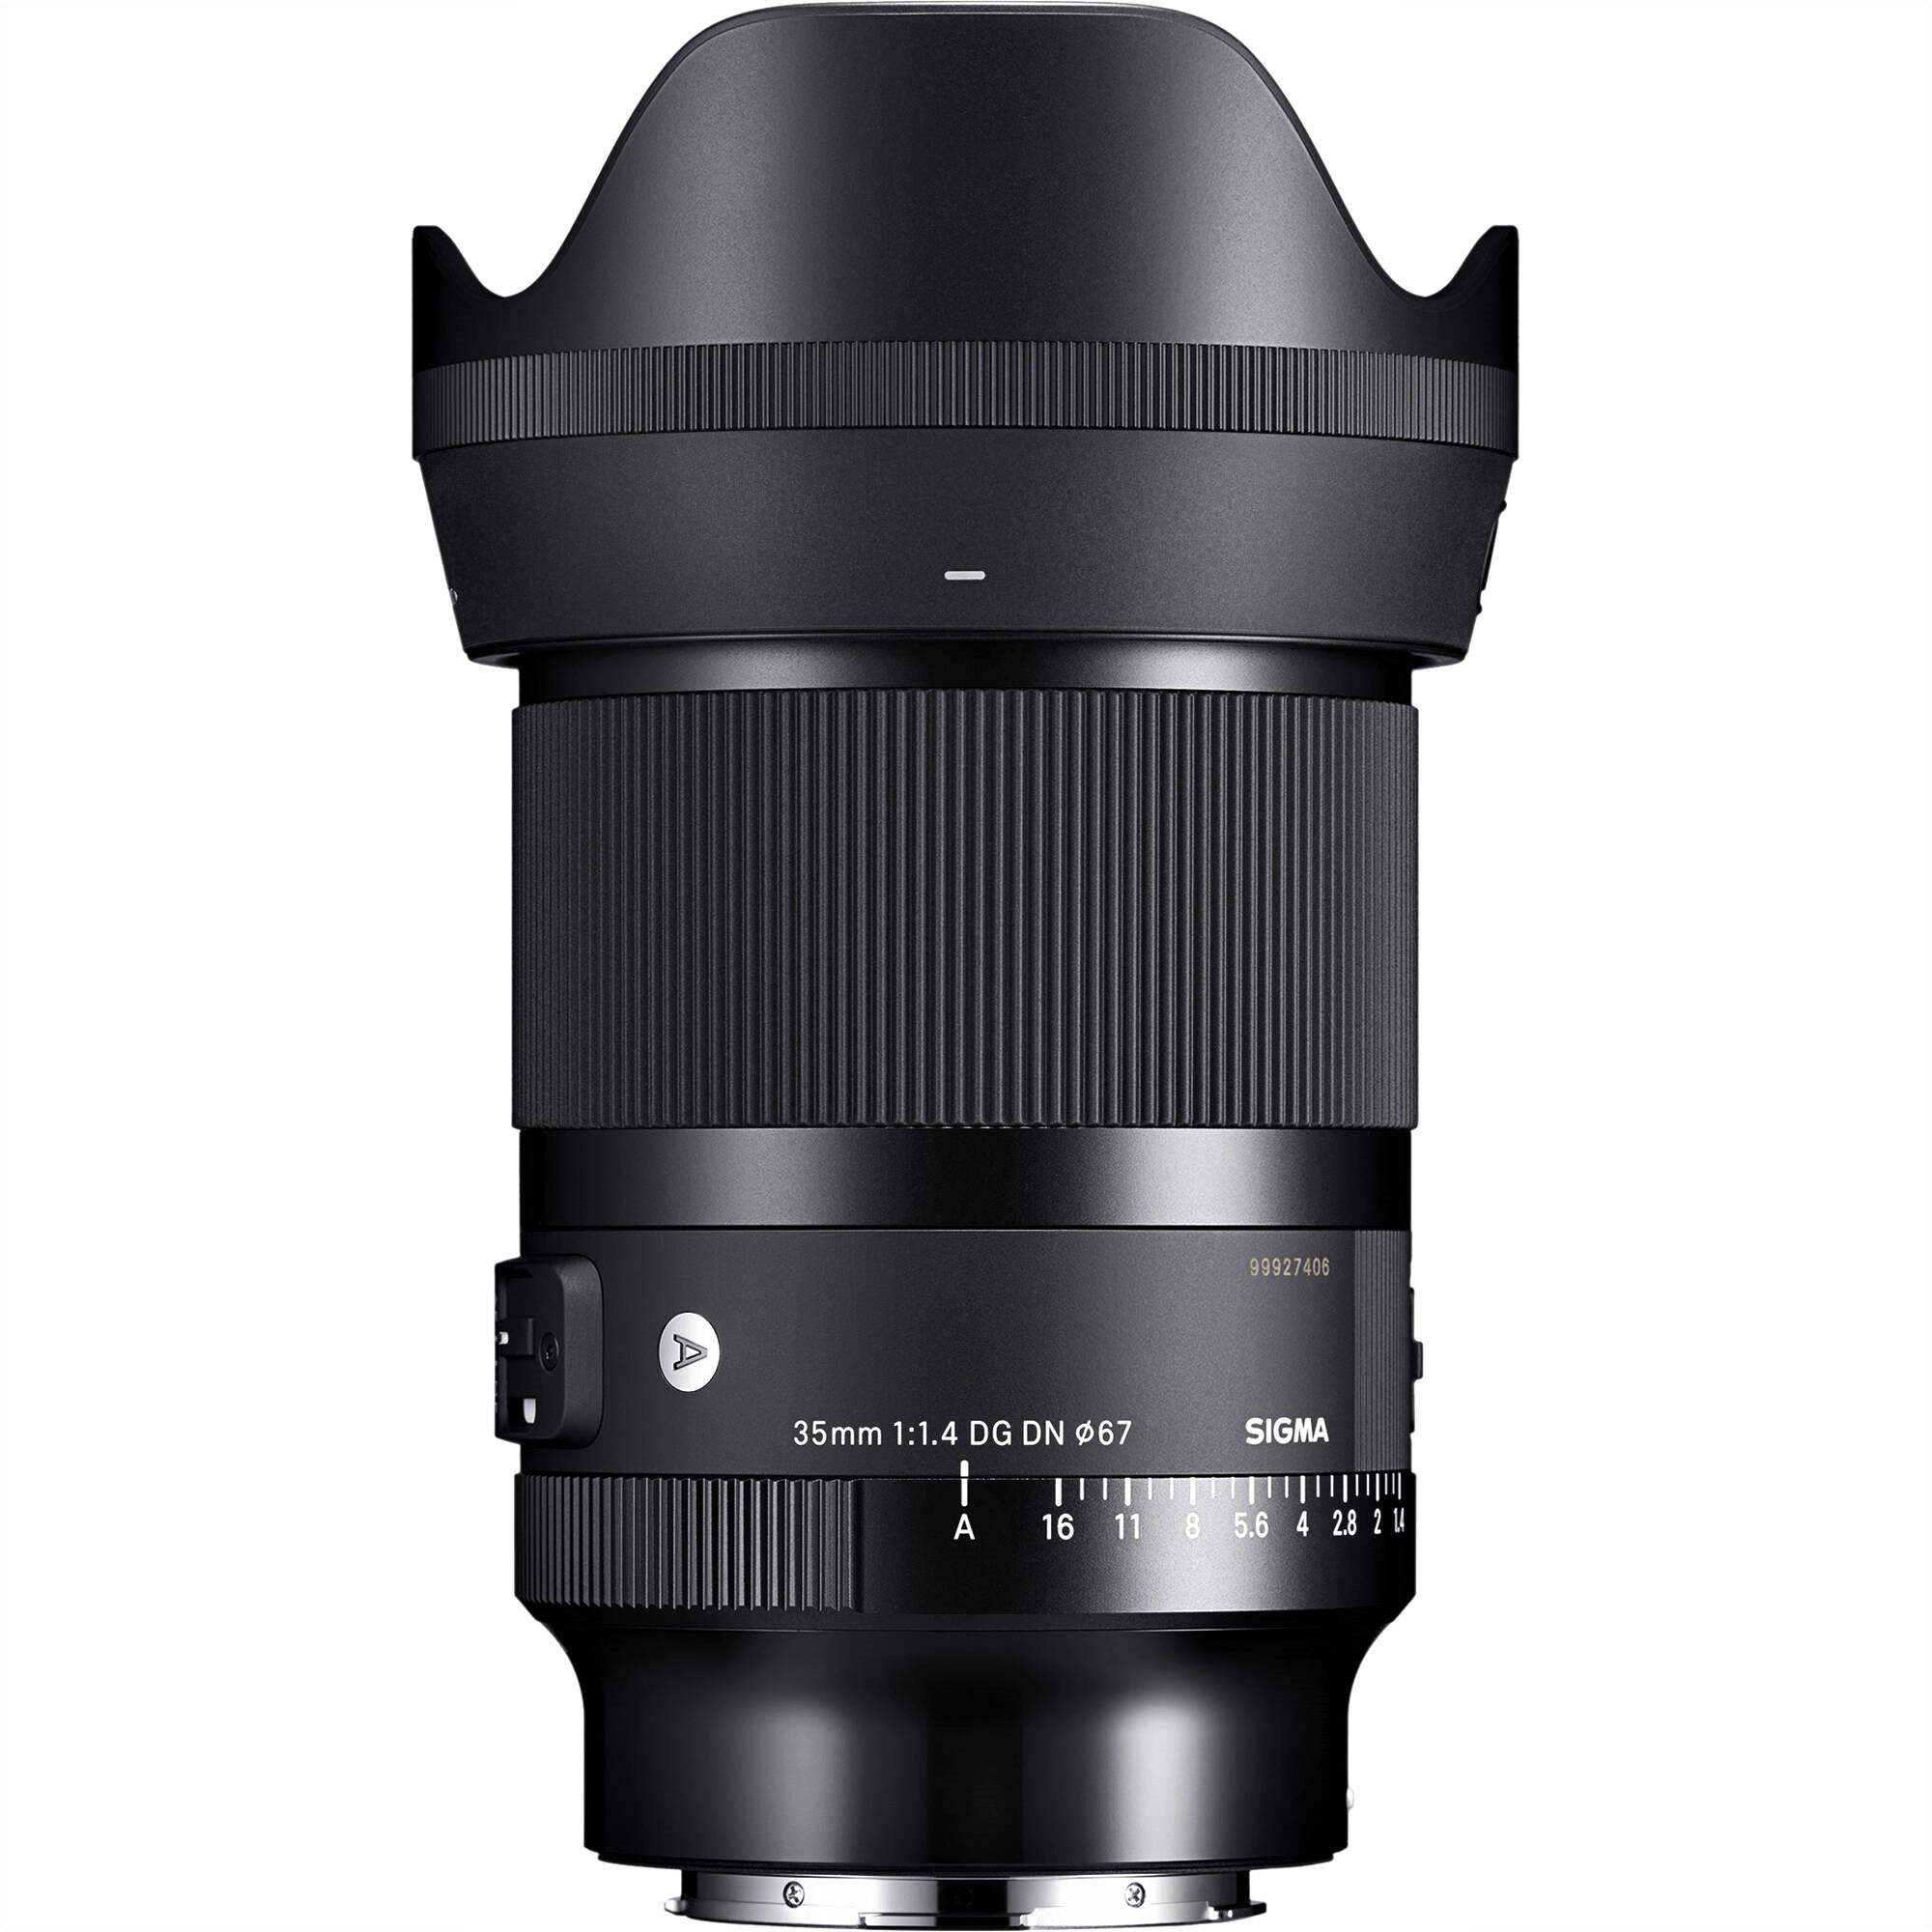 Sigma Lens Hood Attached to 35mm DG DN F1.4 Art Digital Lens